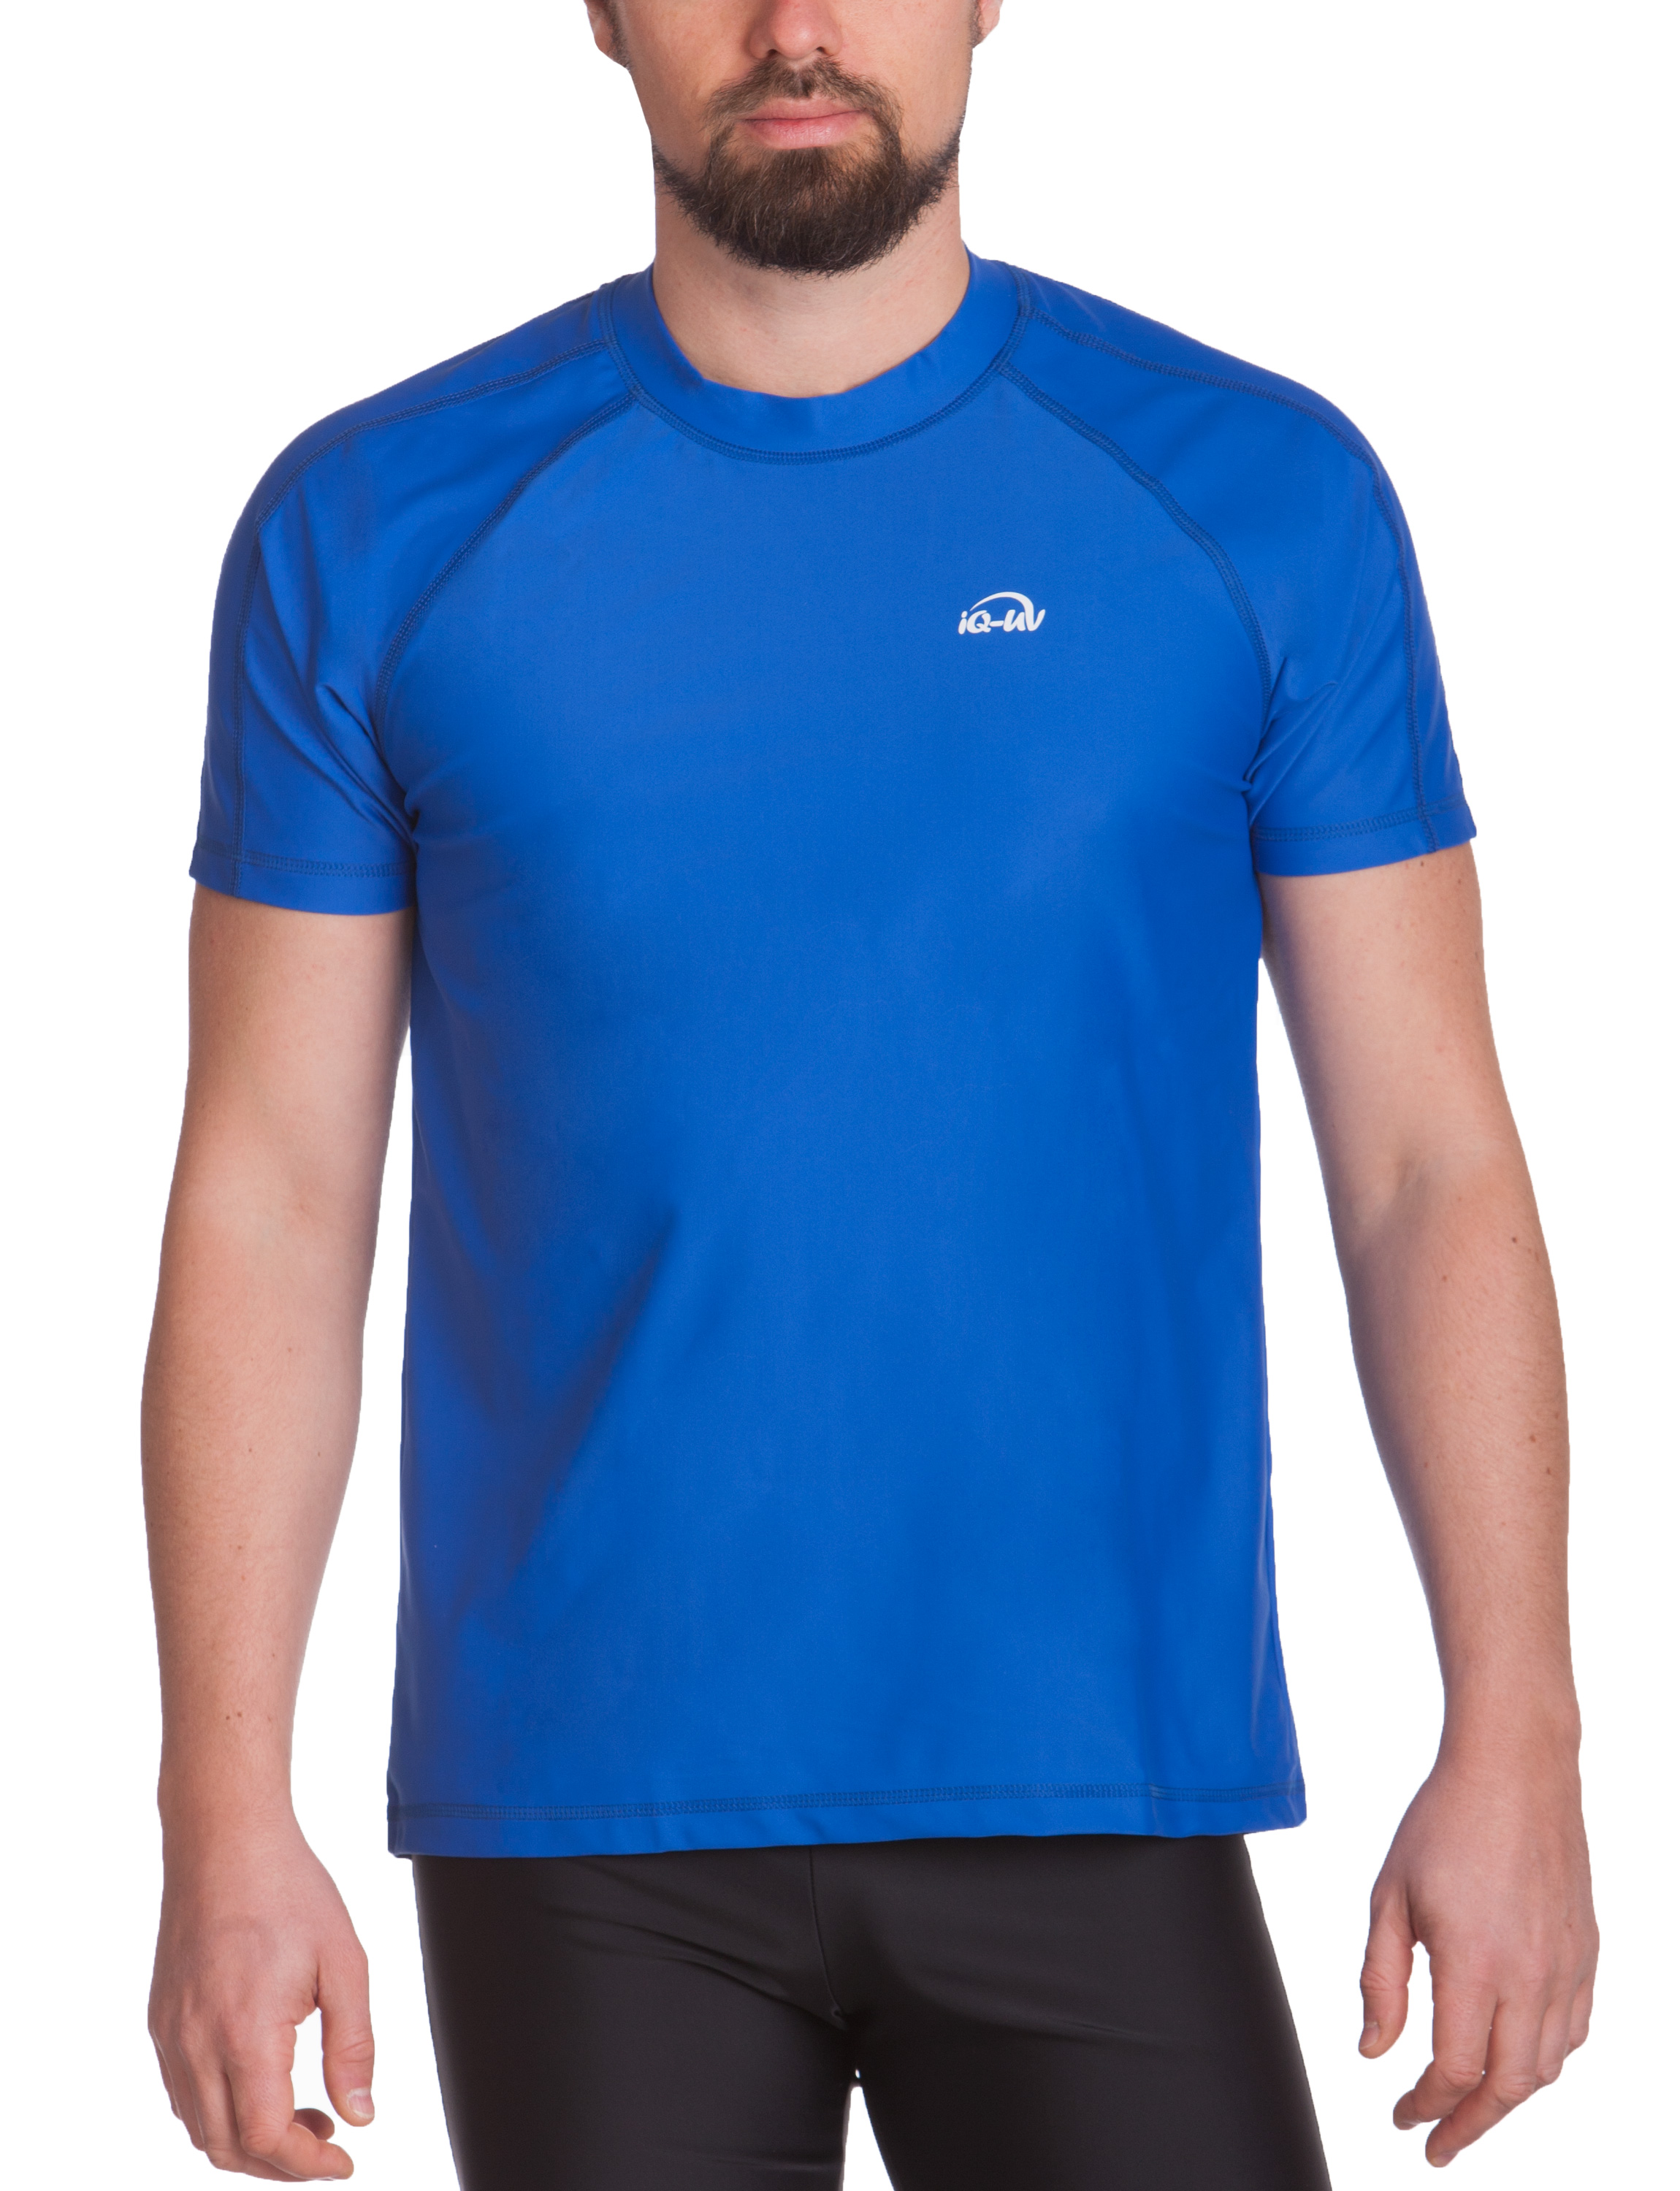 AQUA UV T-Shirt für Herren blau front